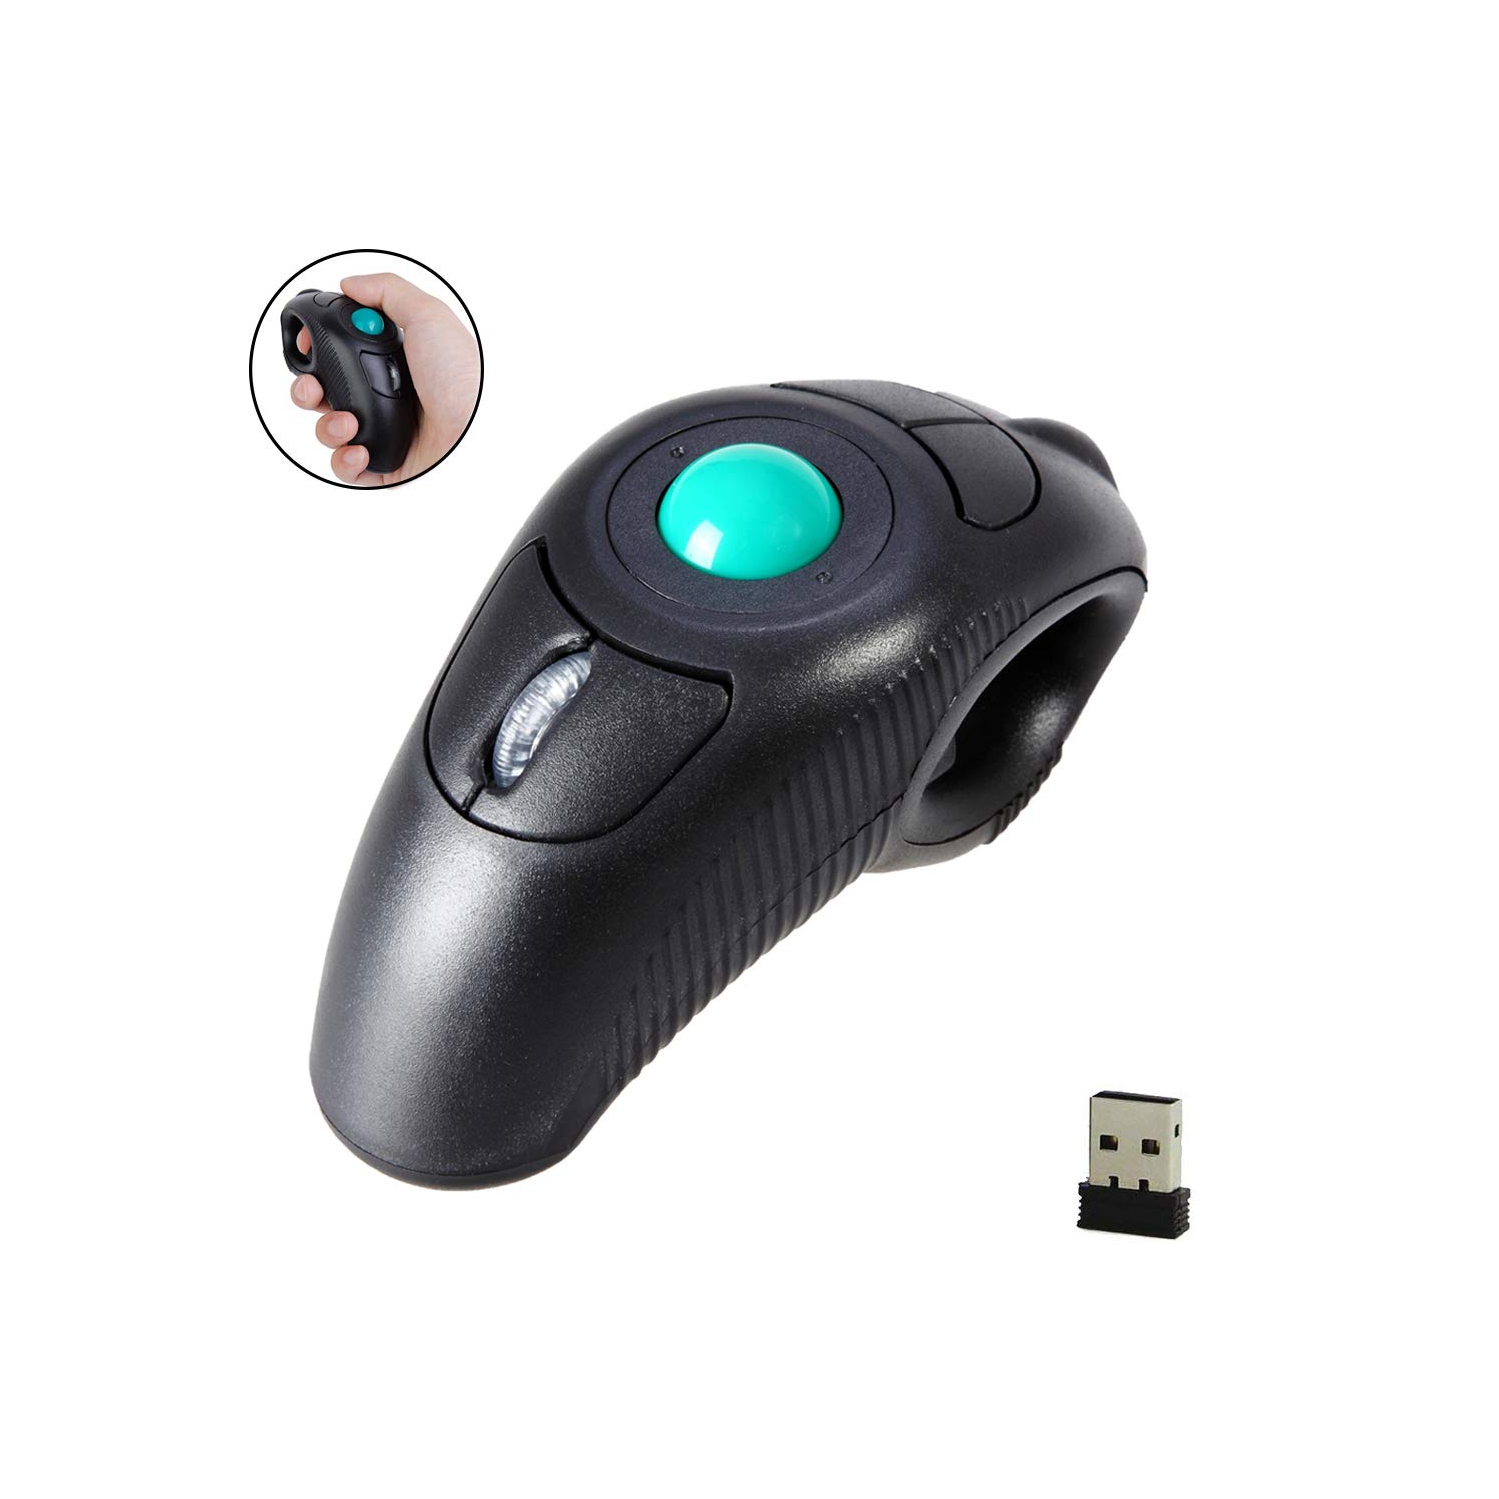 EIGIIS 2.4G Ergonomic Trackball Handheld Finger USB Mouse Wireless Optical Travel DPI Mice for PC Laptop Mac Left and Right